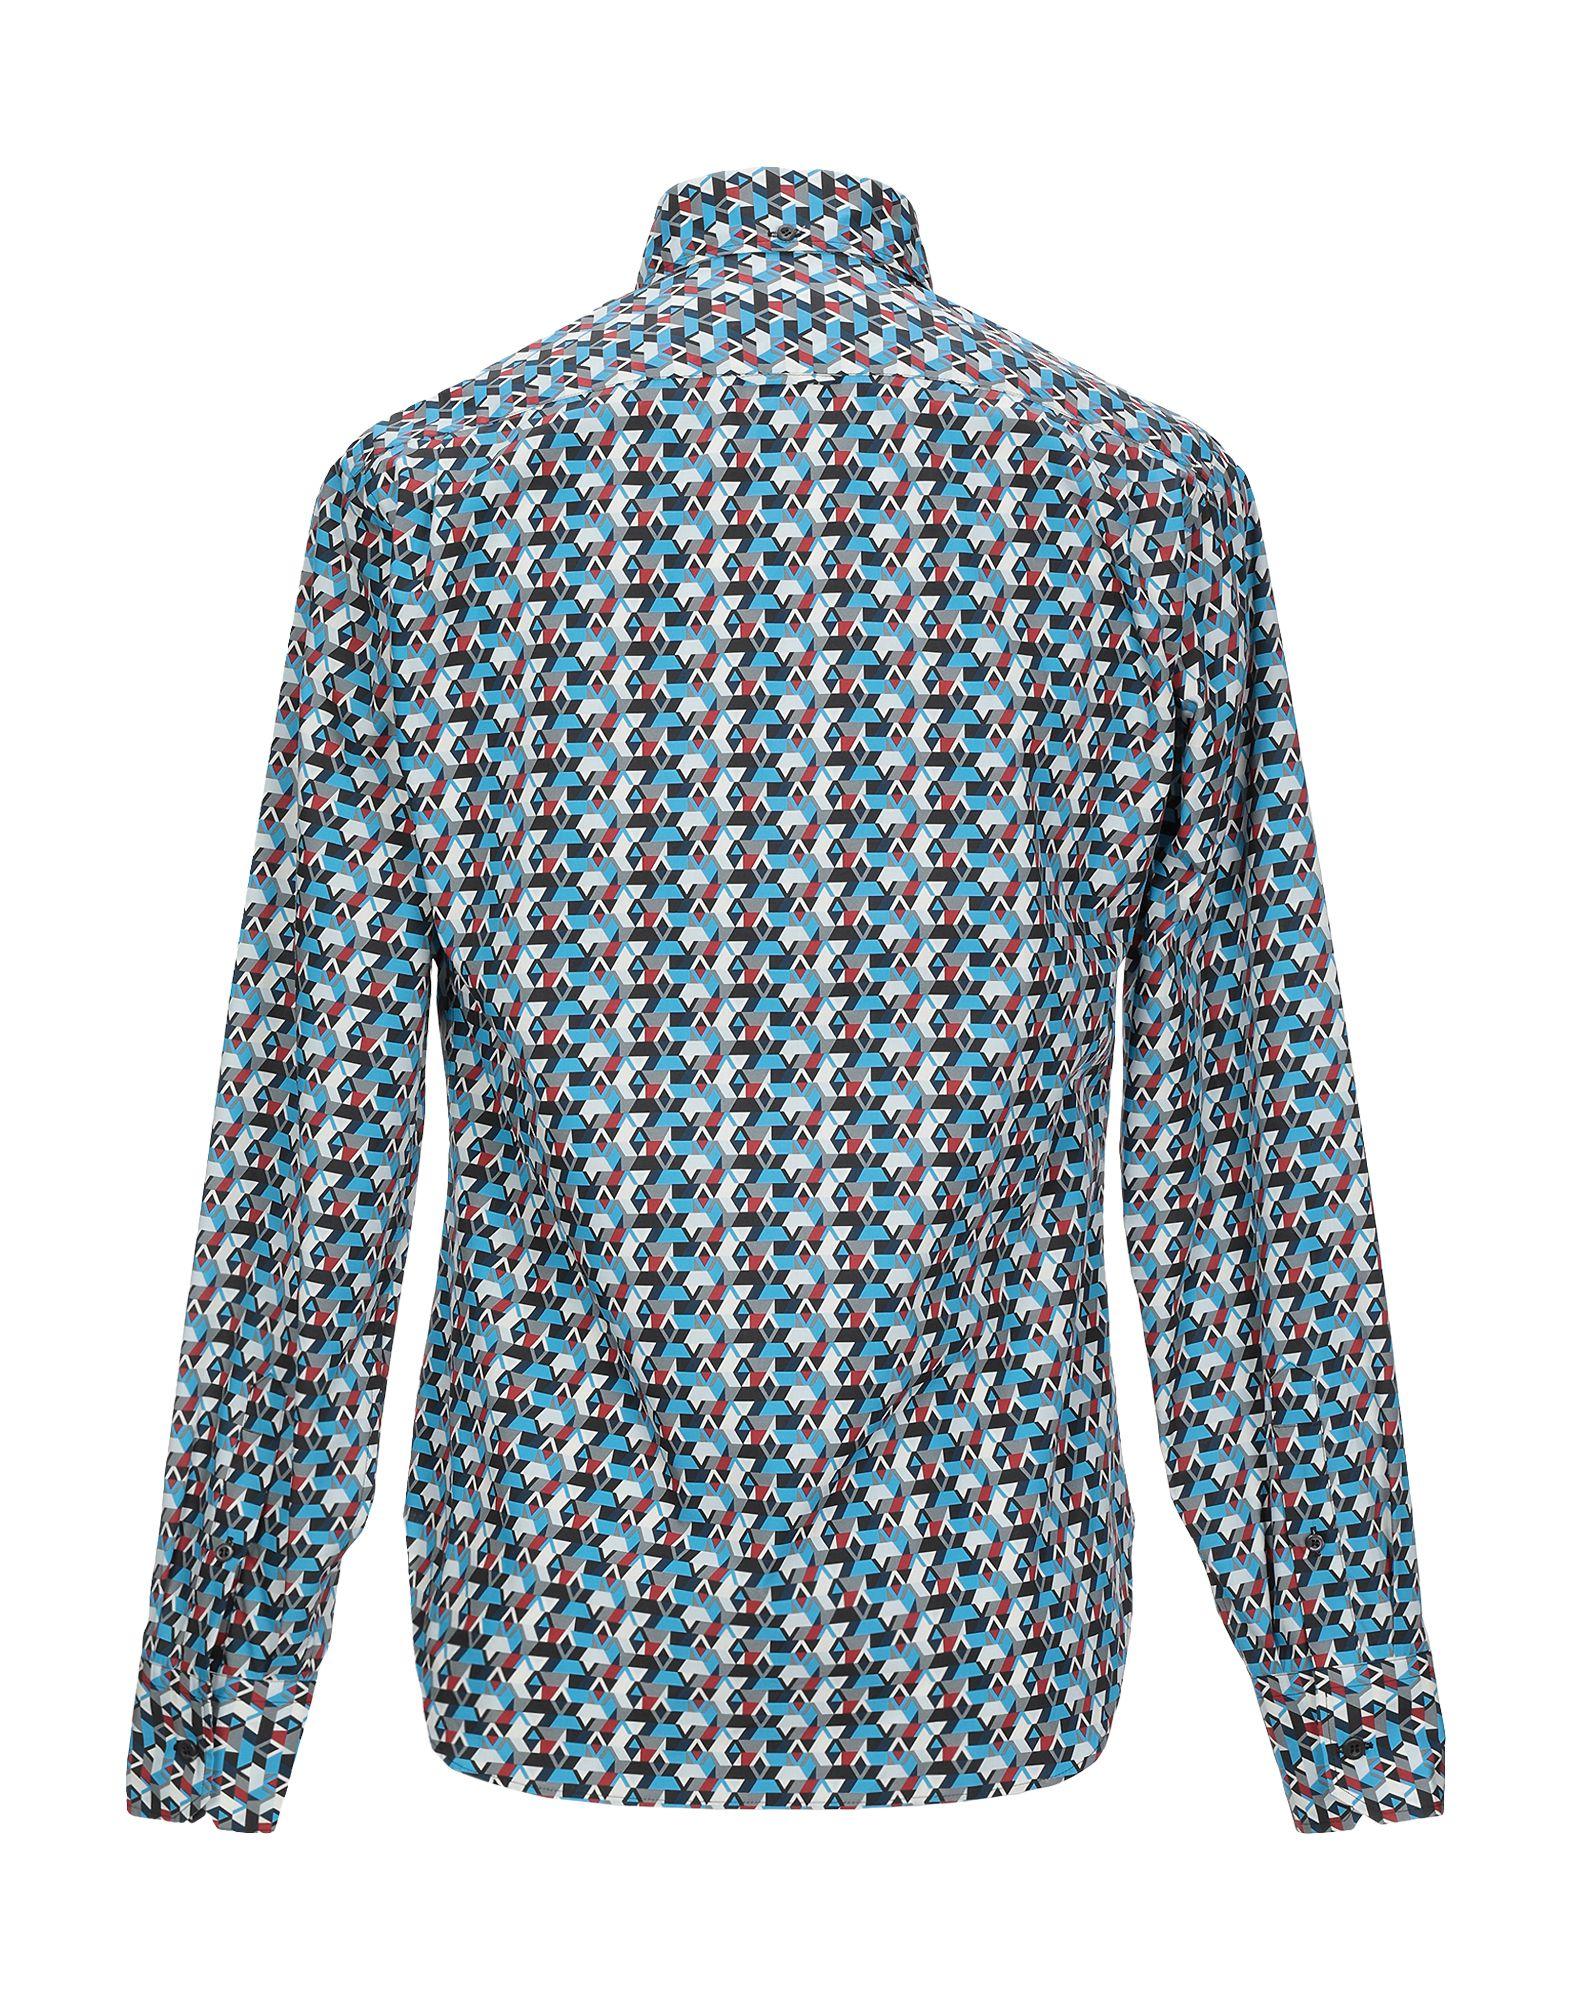 Prada Cotton Shirt in Azure (Blue) for Men - Lyst